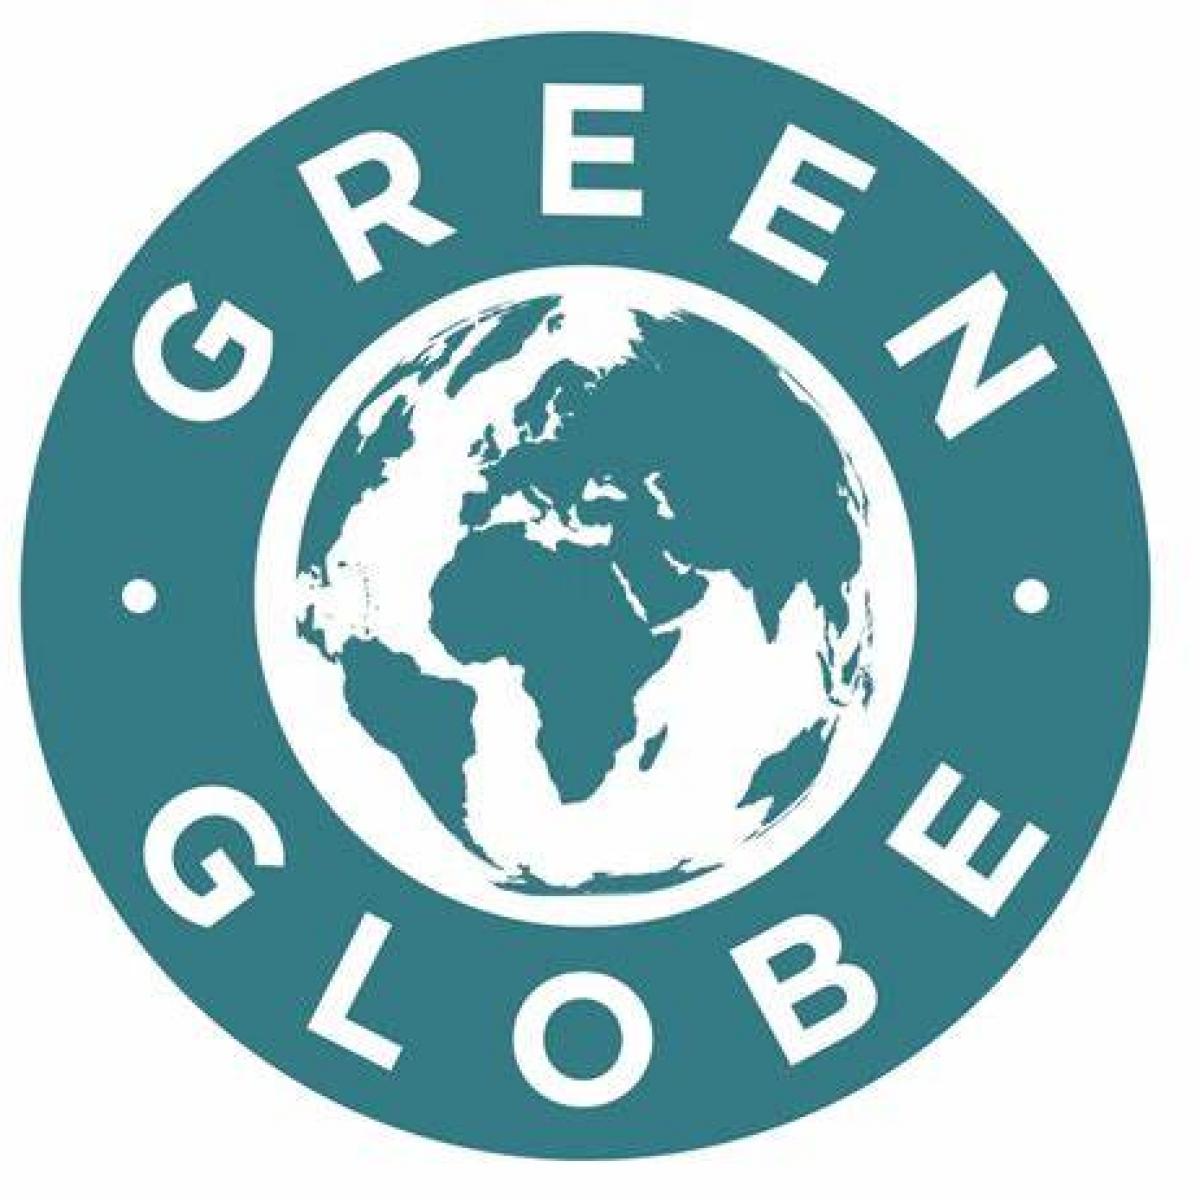 Logo Green Globe